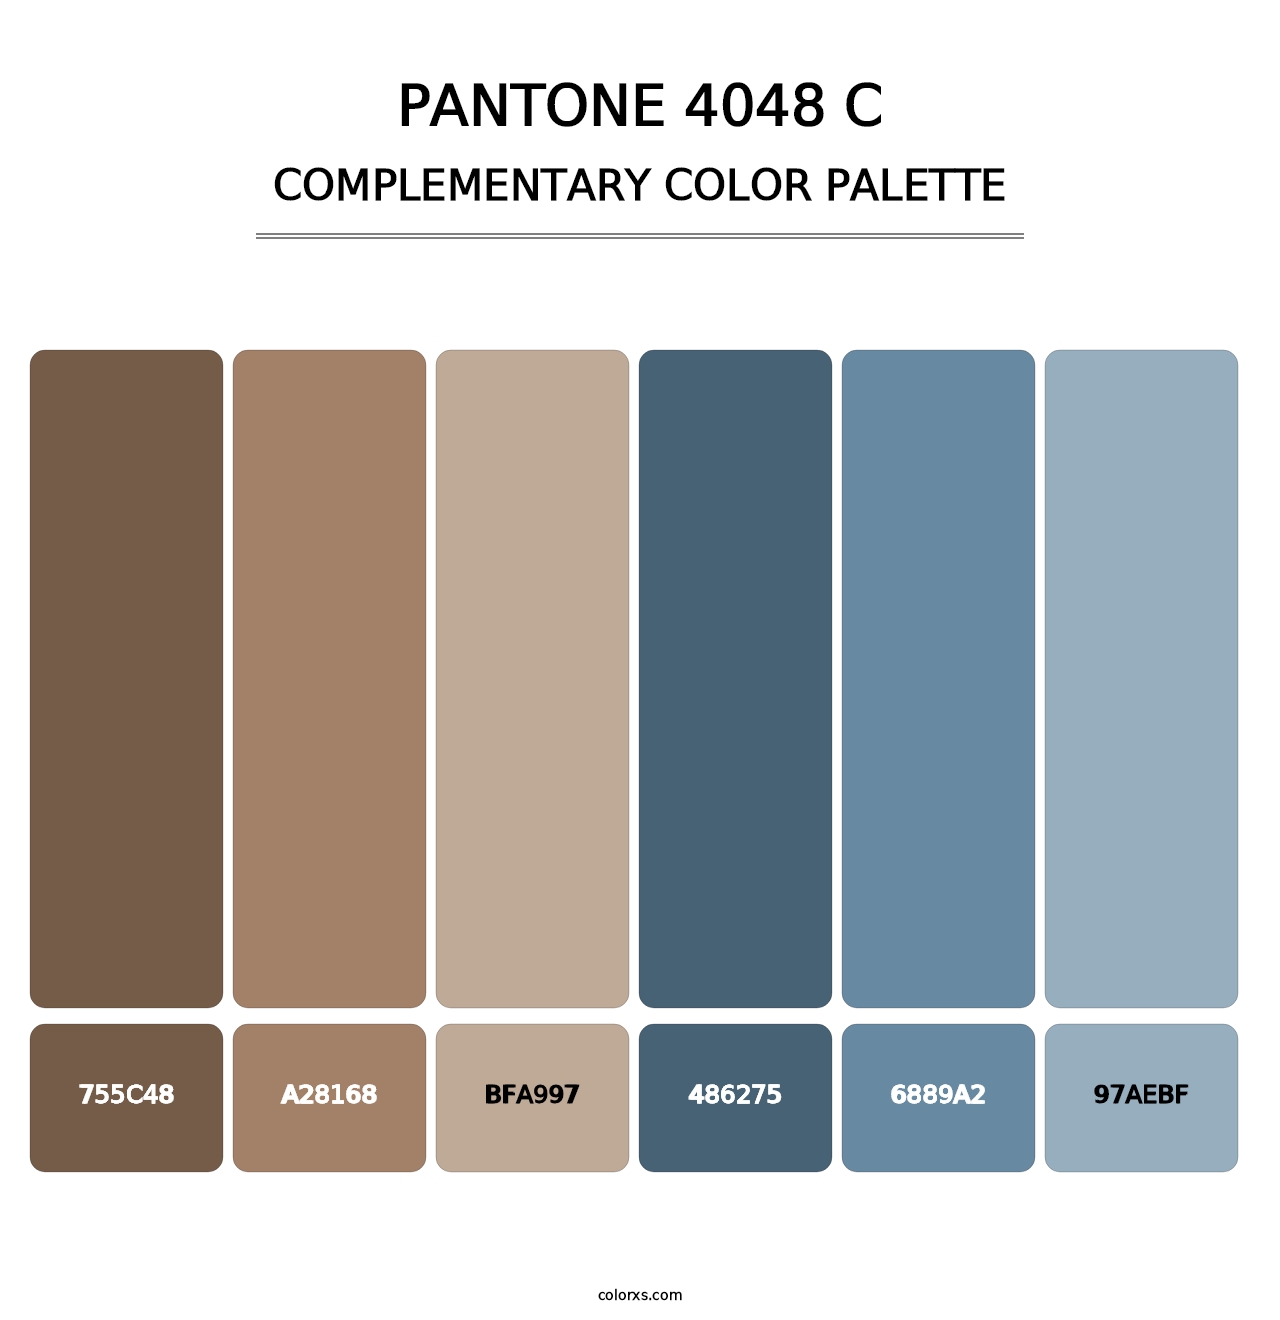 PANTONE 4048 C - Complementary Color Palette